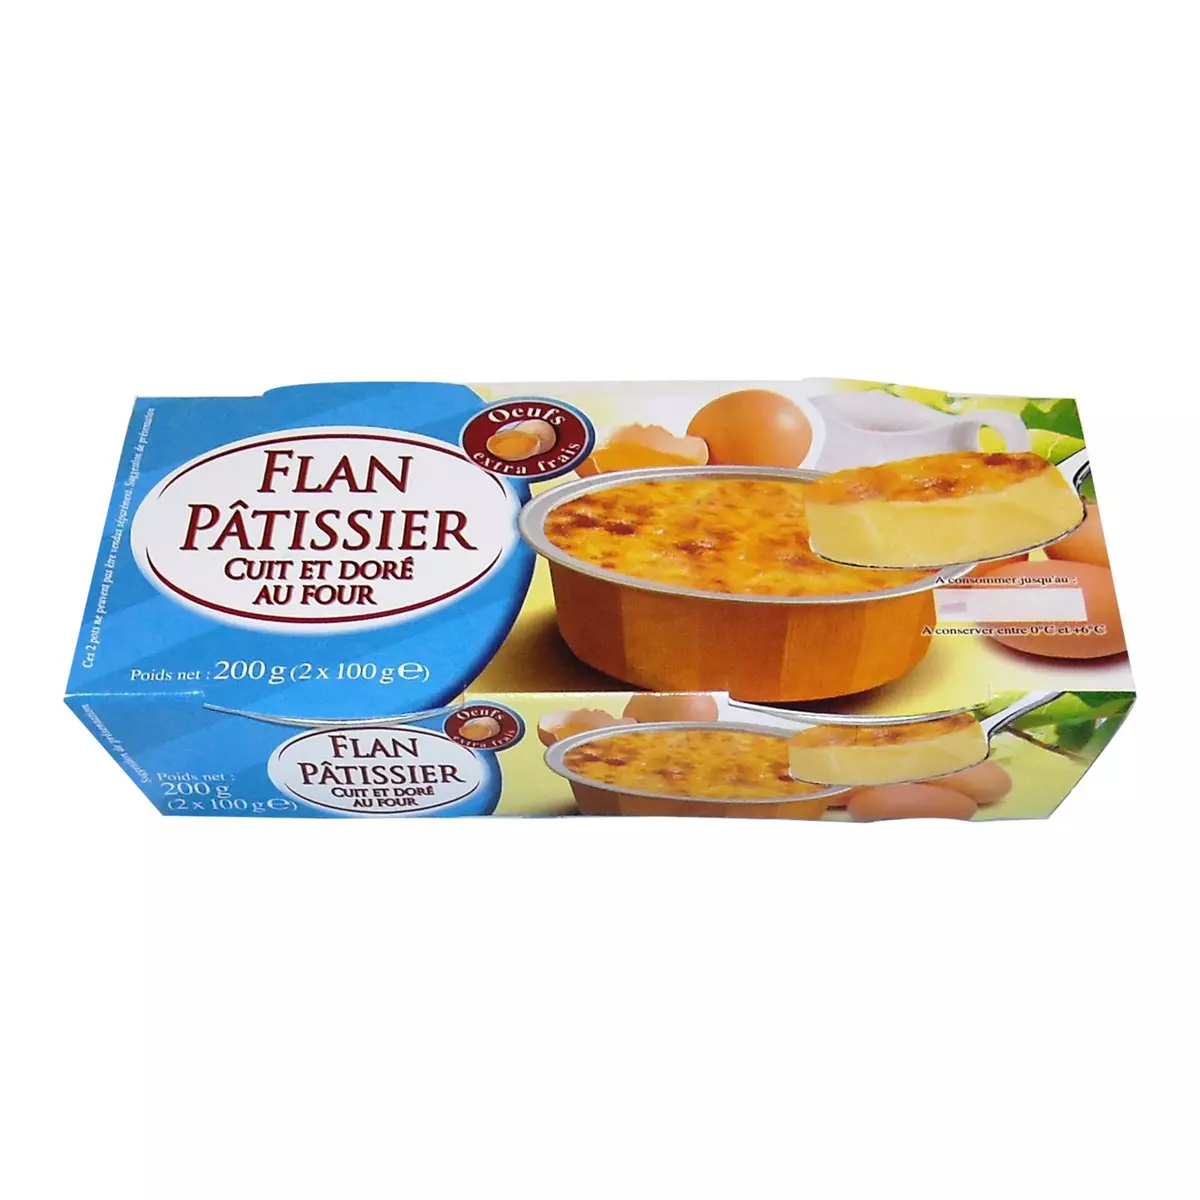 DISCOUNT Flan pâtissier 2x100g